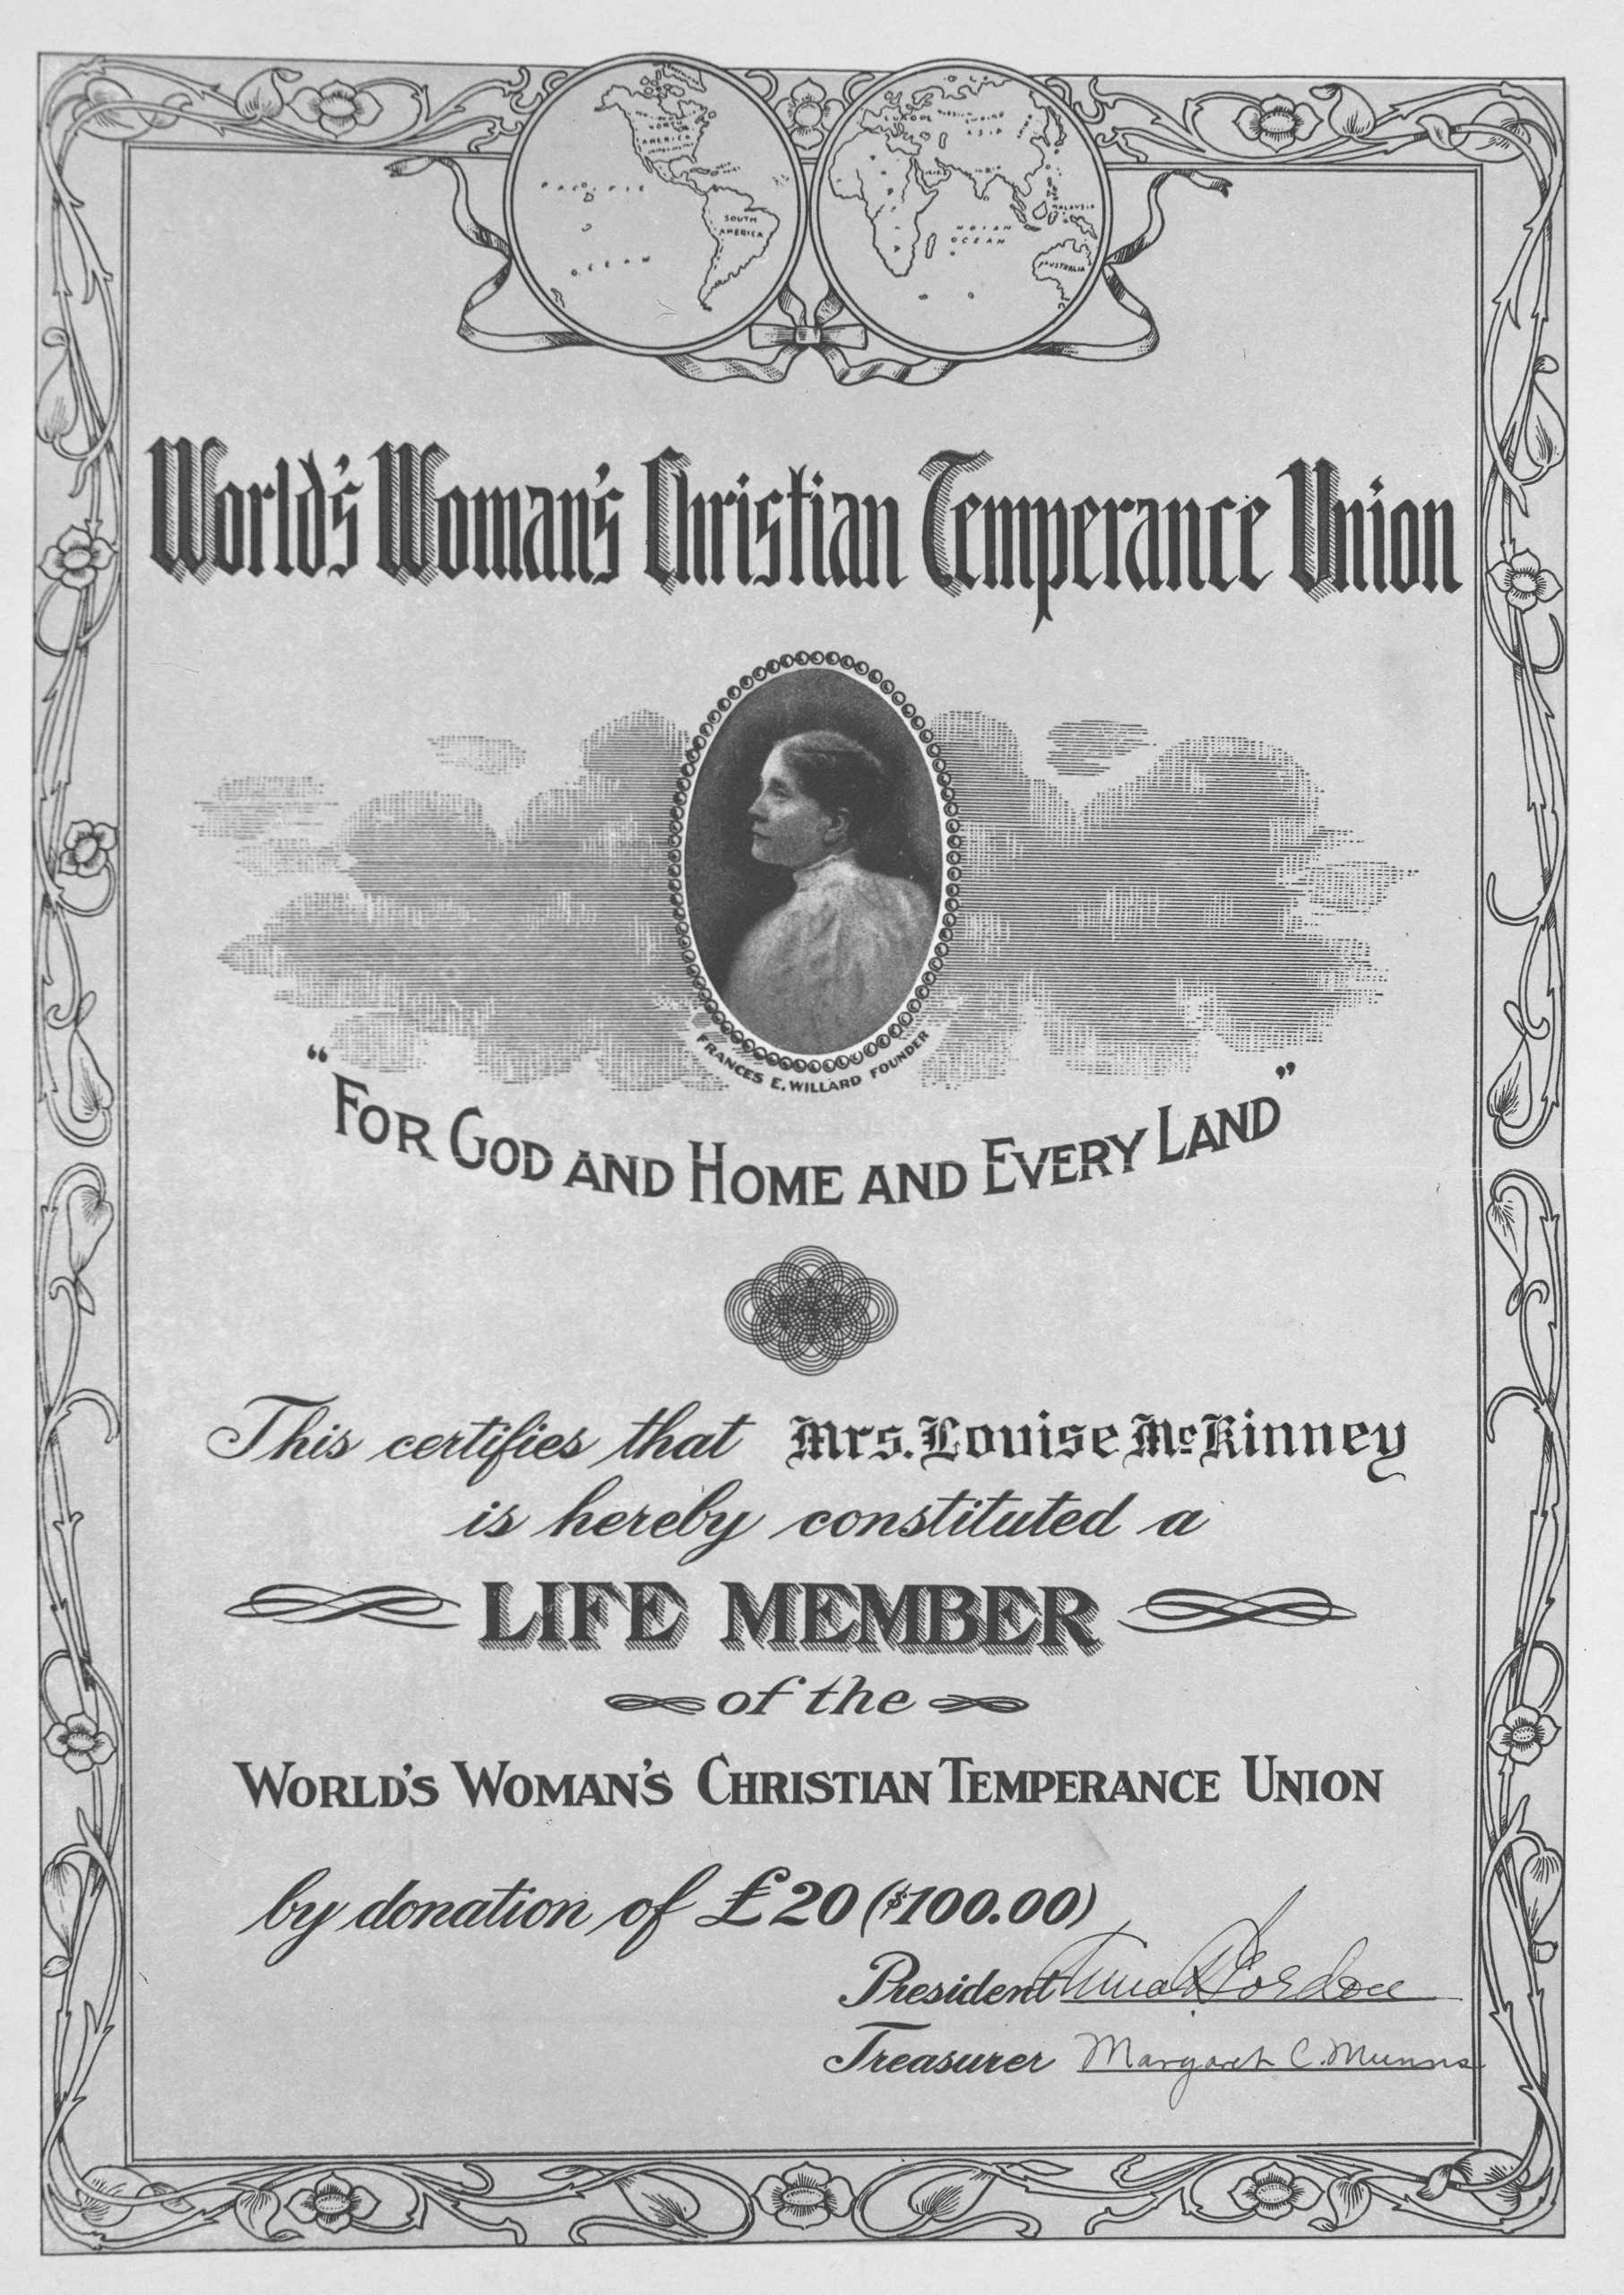 Photo of World’s Women’s Christian Temperance Union Certificate